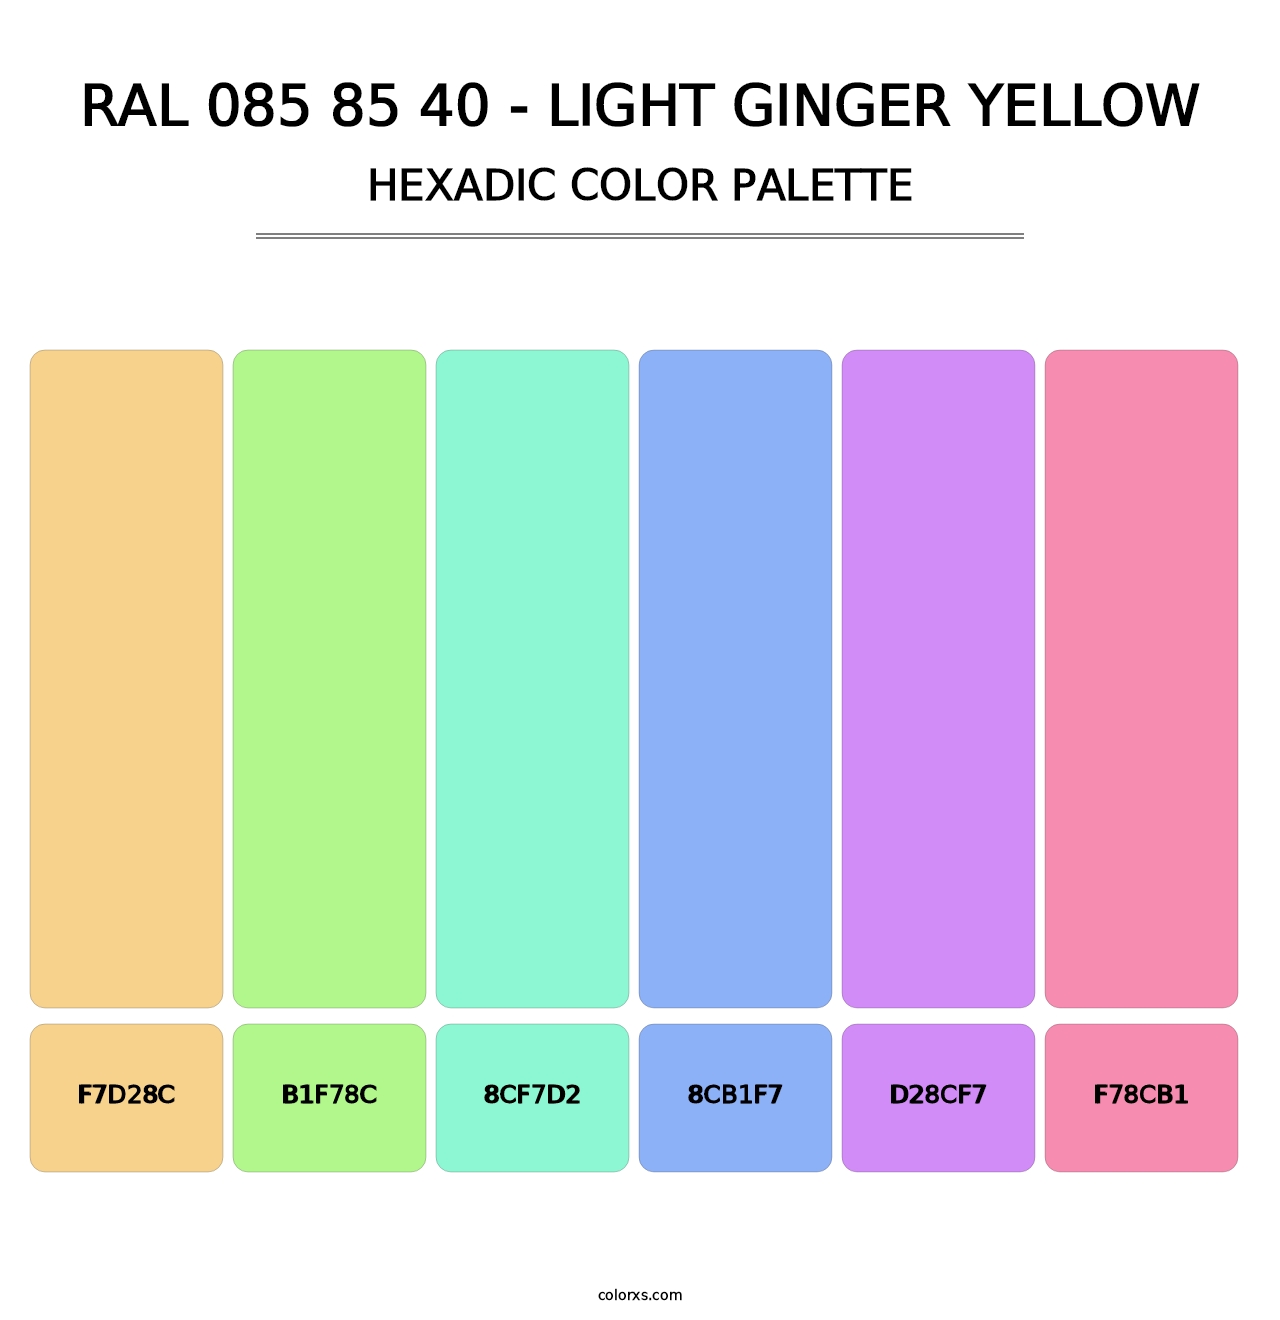 RAL 085 85 40 - Light Ginger Yellow - Hexadic Color Palette